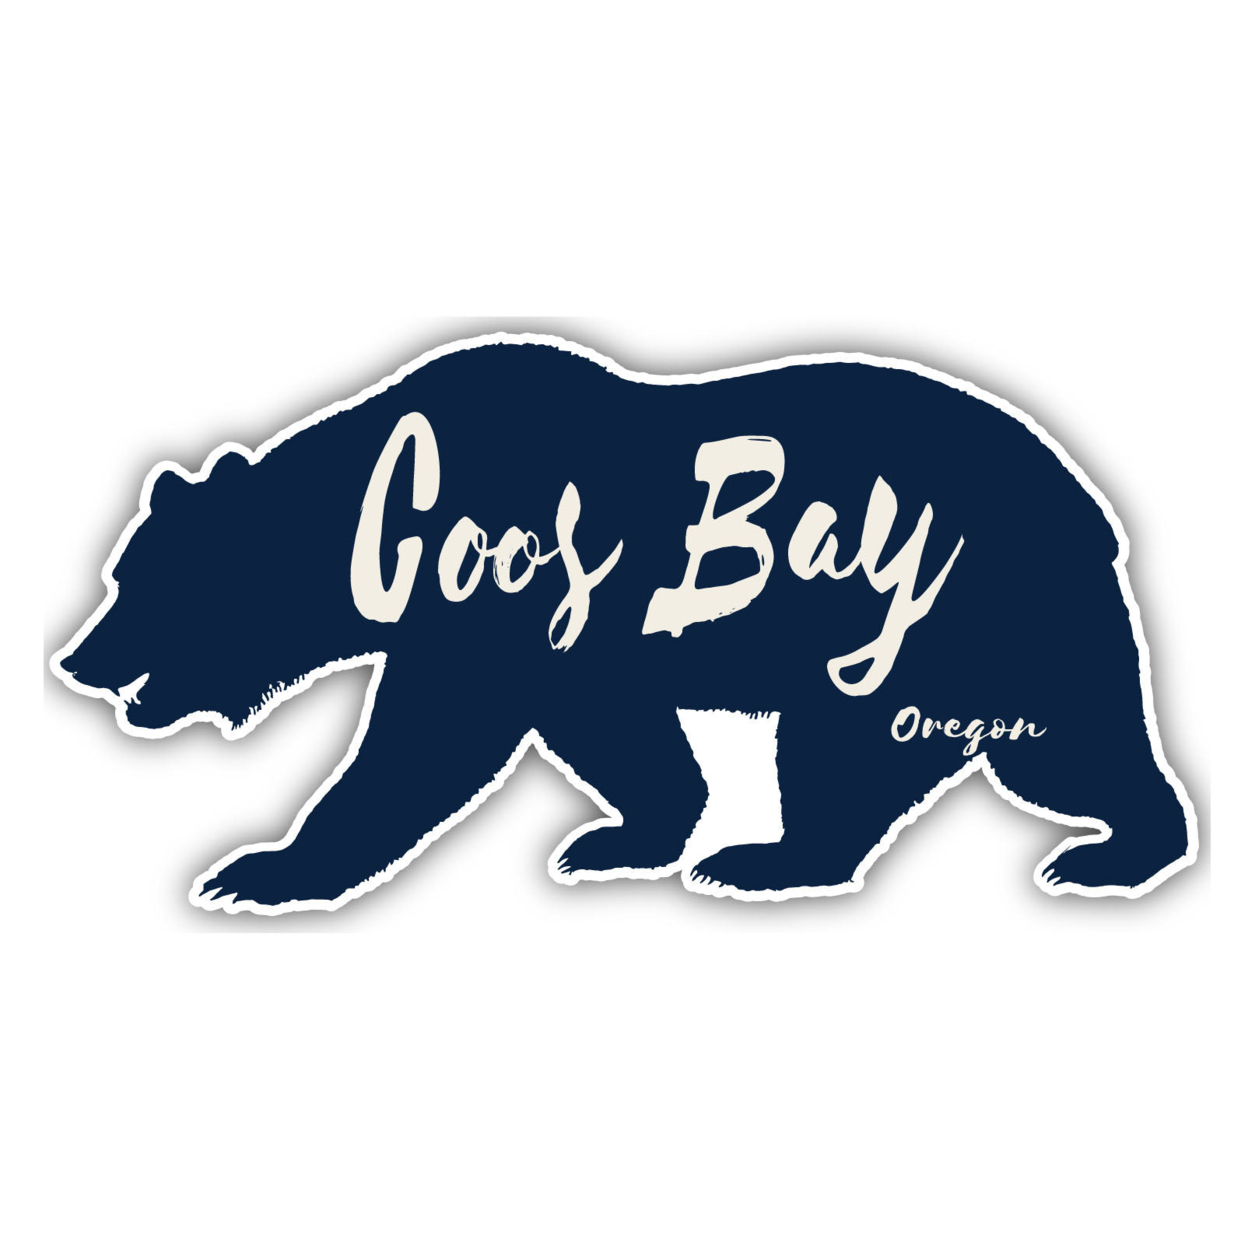 Coos Bay Oregon Souvenir Decorative Stickers (Choose Theme And Size) - Single Unit, 4-Inch, Bear